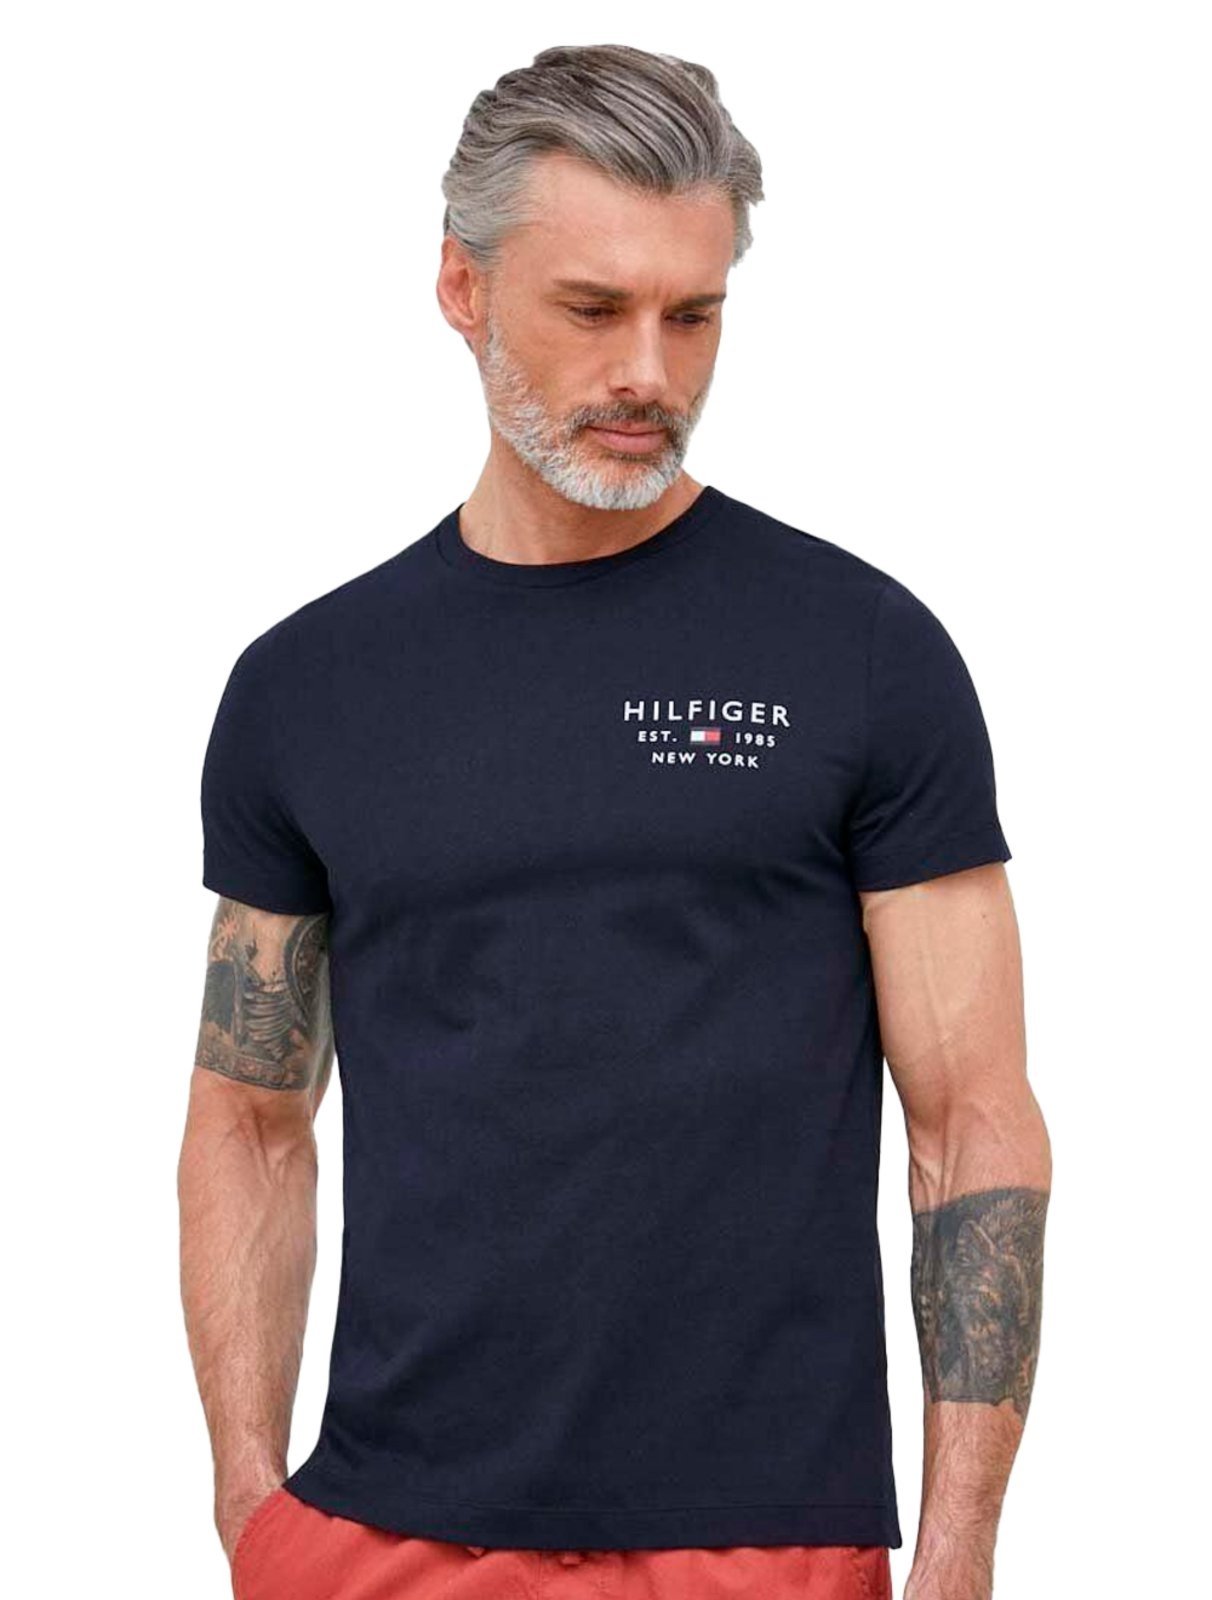 Camiseta Tommy Hilfiger Established Stackes Tee Azul Marinho